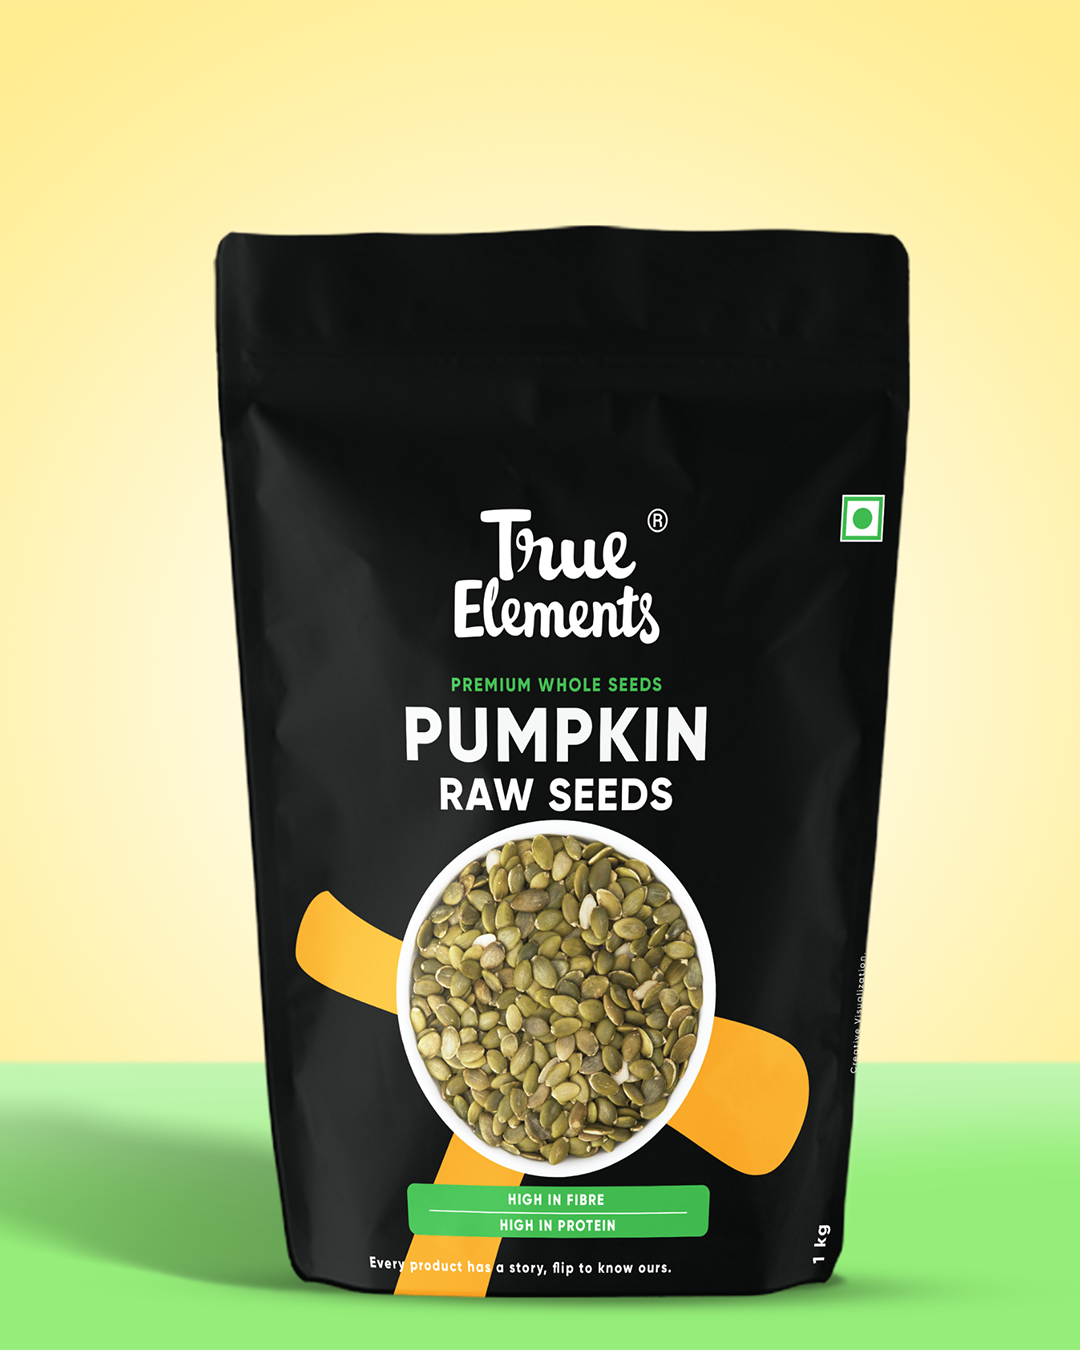 True elements raw pumpkin seeds 1kg Pouch (Premium Whole Seeds)